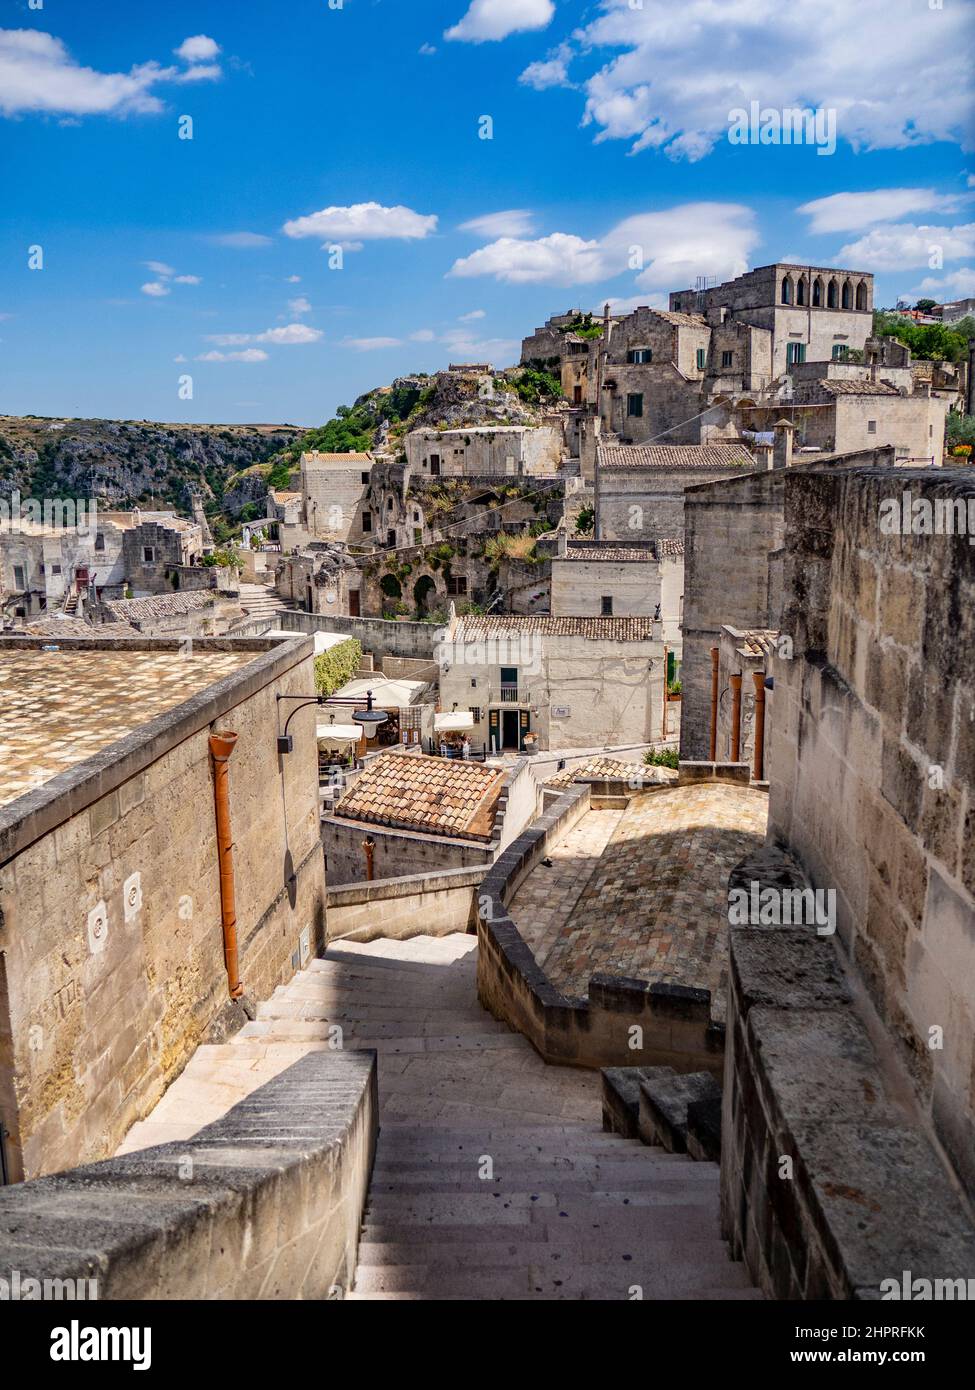 Italy, Basilicata, Matera, View of old town Stock Photo